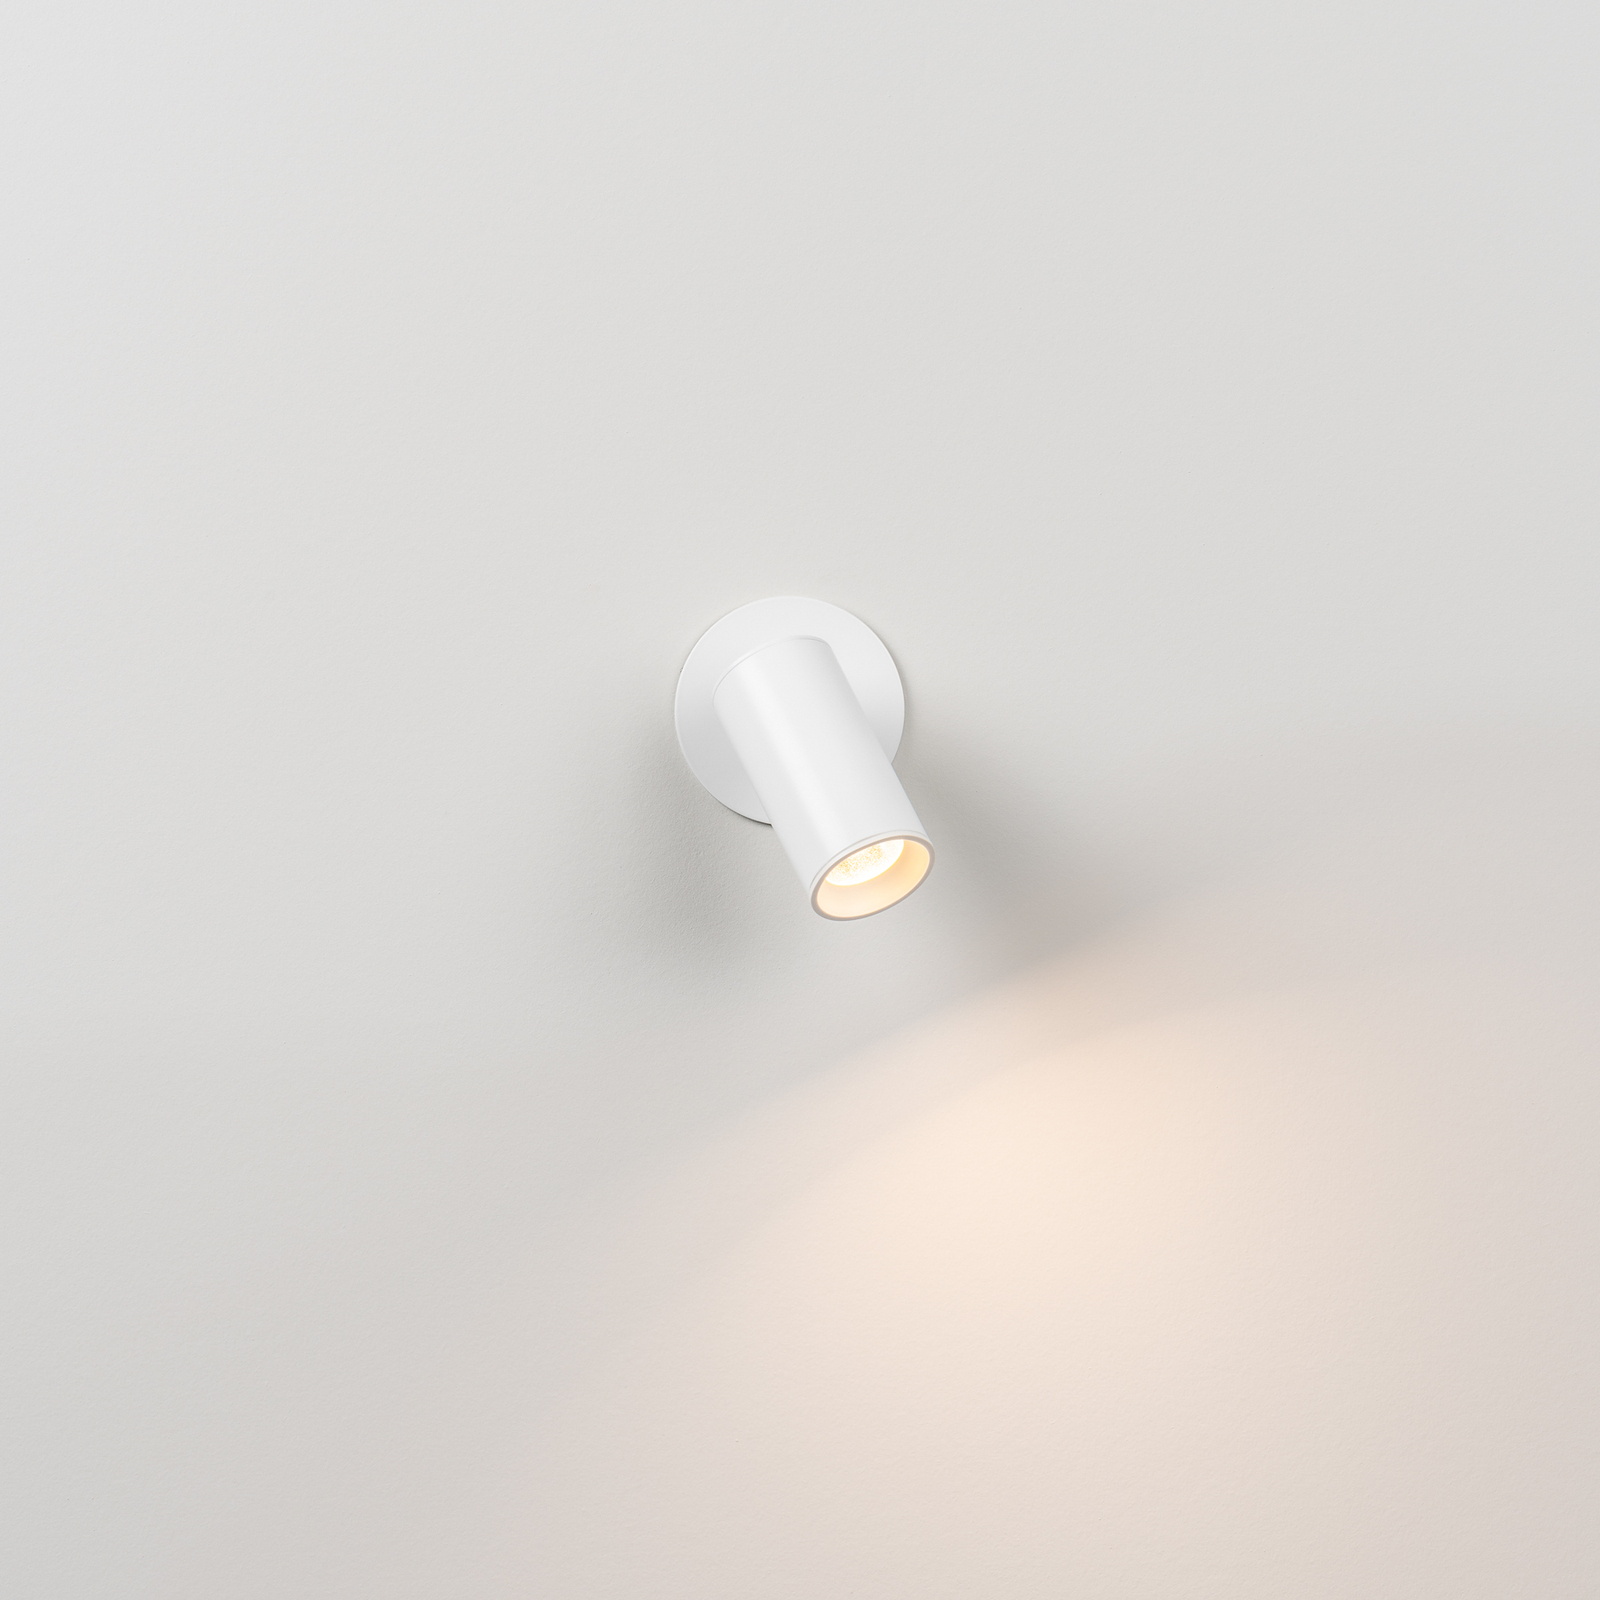 Milan Haul spot LED incasso bianco